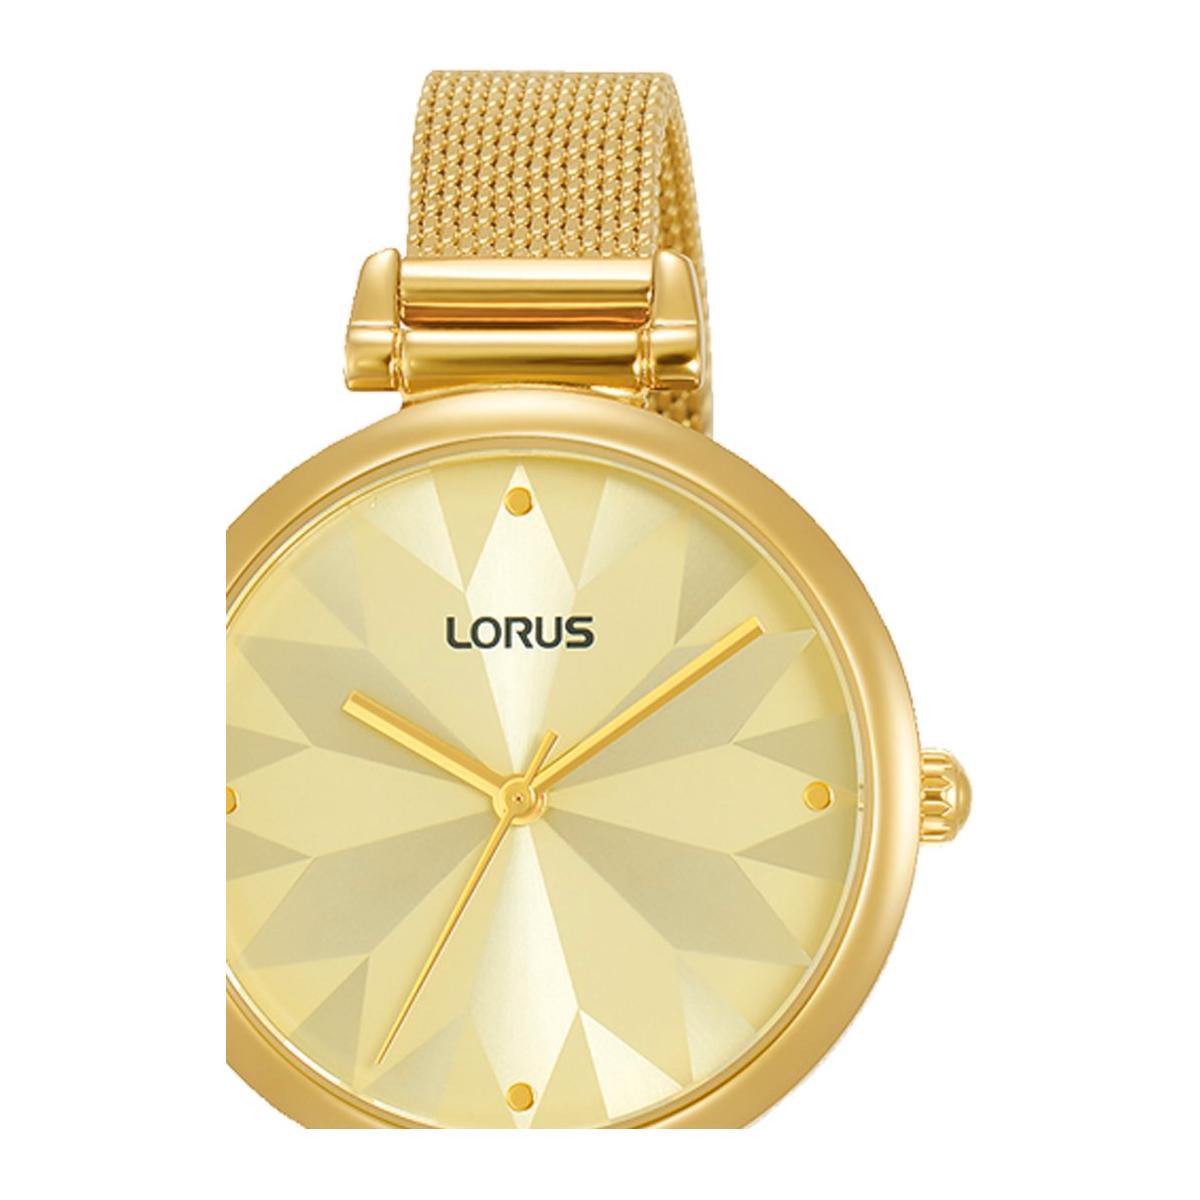 LORUS LORUS WATCHES Mod. RG208TX5 WATCHES lorus-watches-mod-rg208tx5